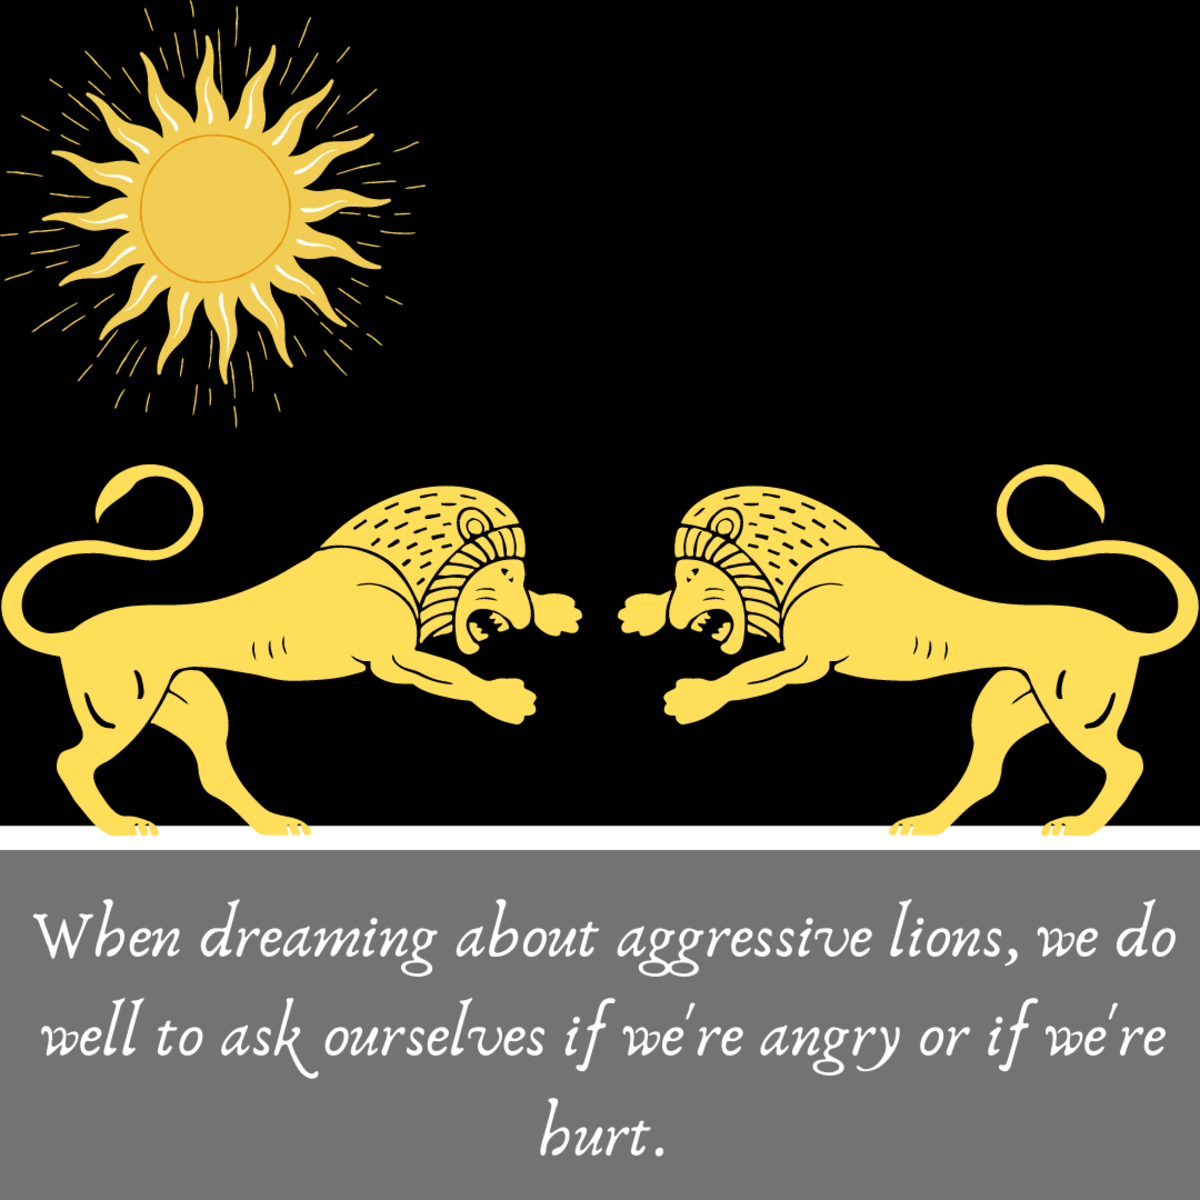 Lions are often symbols of aggression.